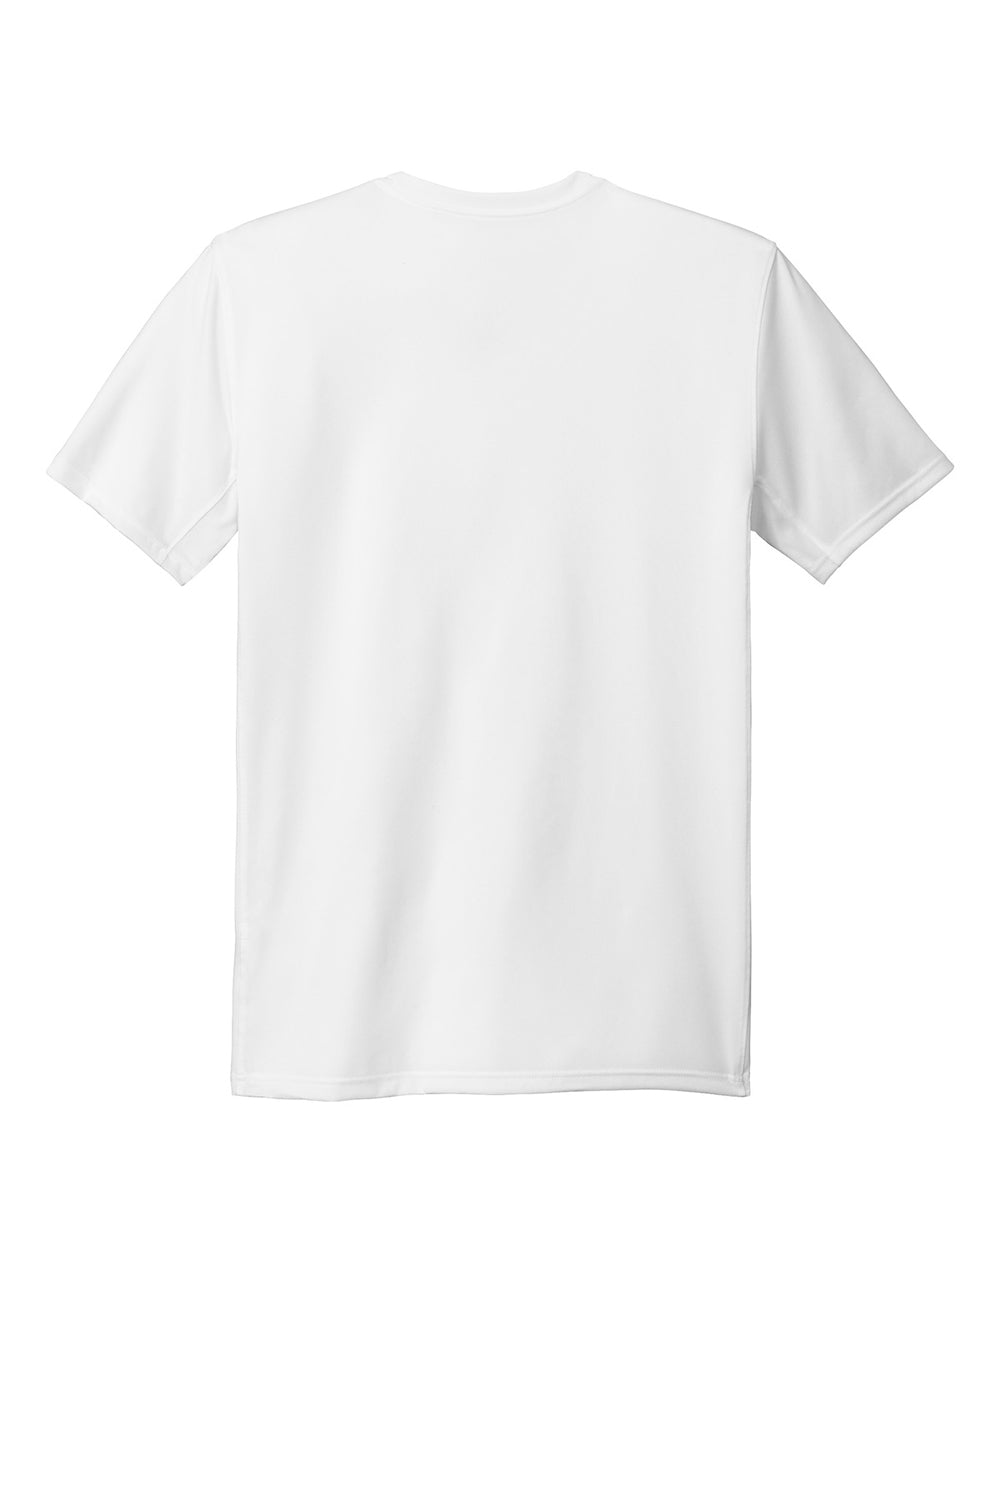 Nike 727982 Mens Legend Dri-Fit Moisture Wicking Short Sleeve Crewneck T-Shirt White Flat Back